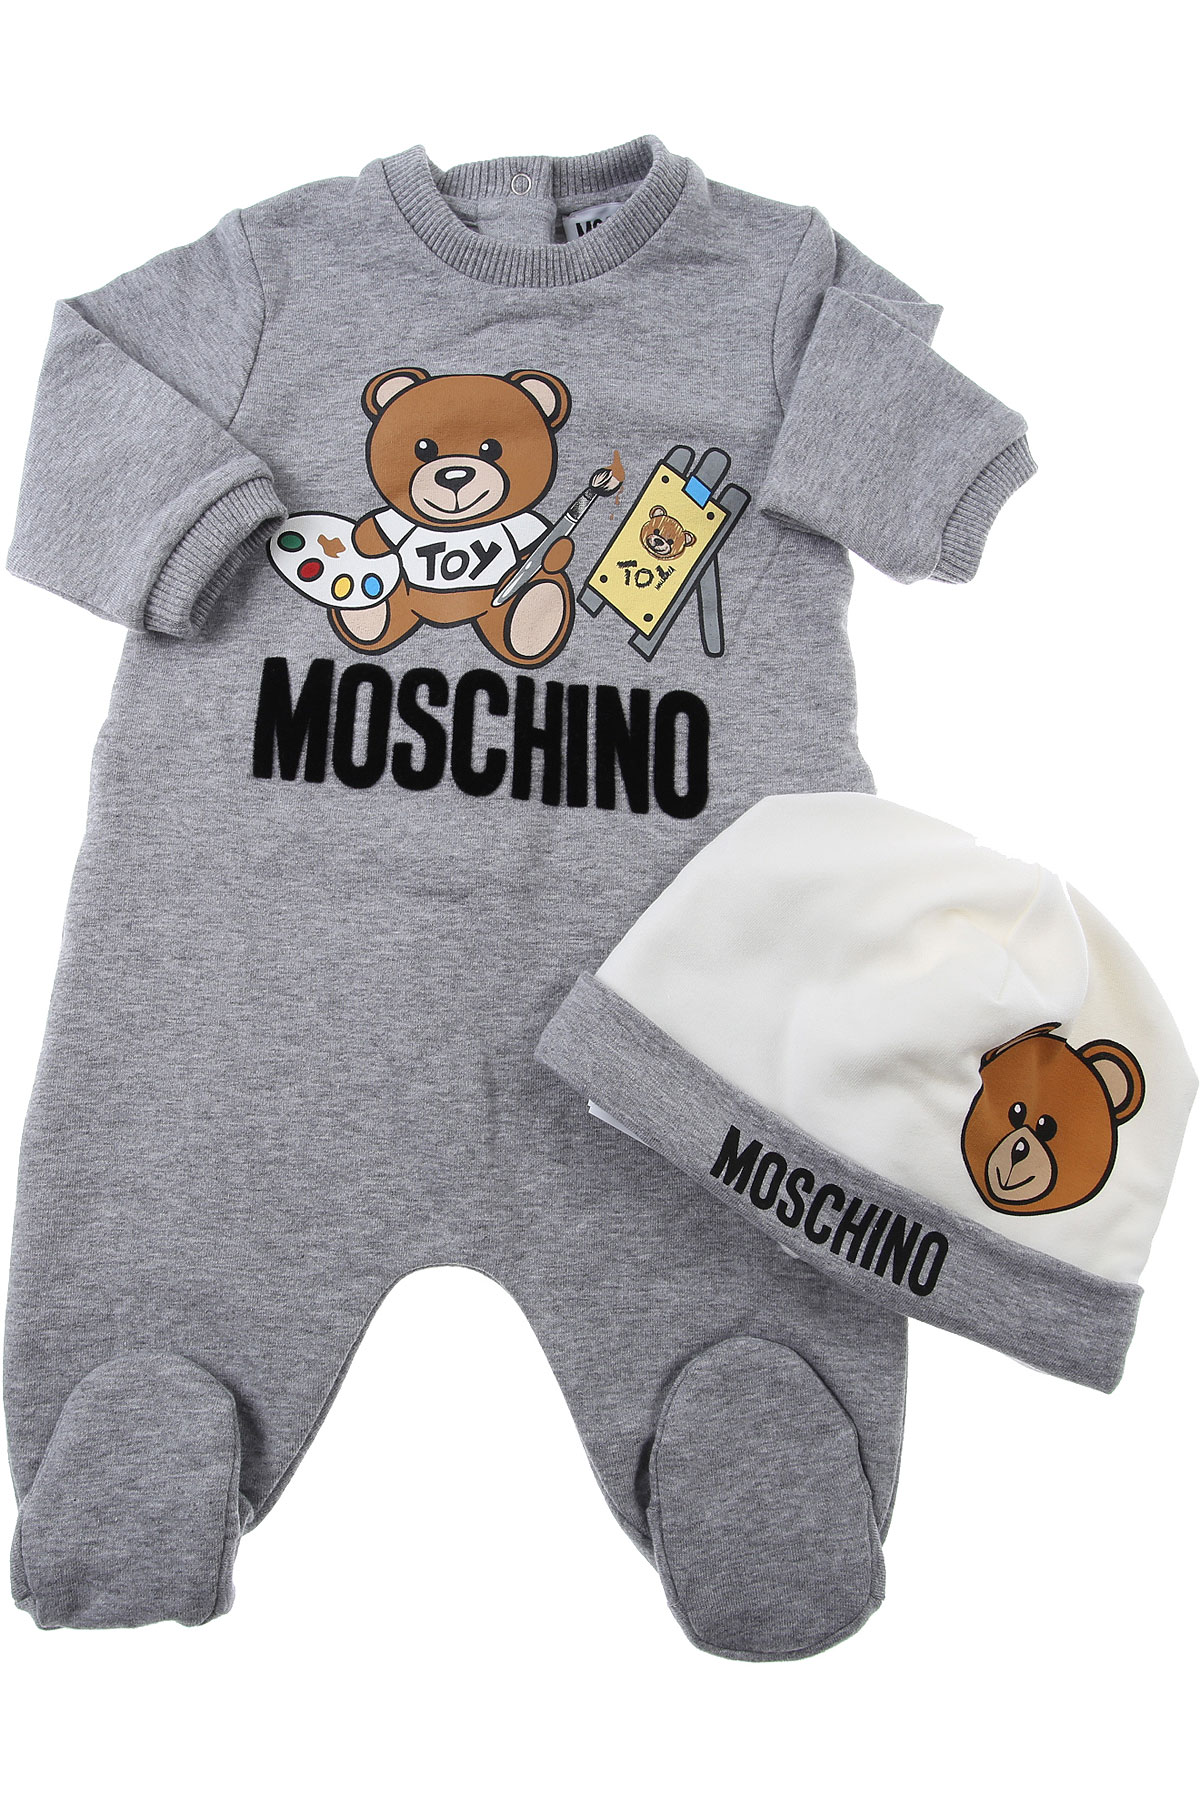 Baby Boy Clothing Moschino, Style code 